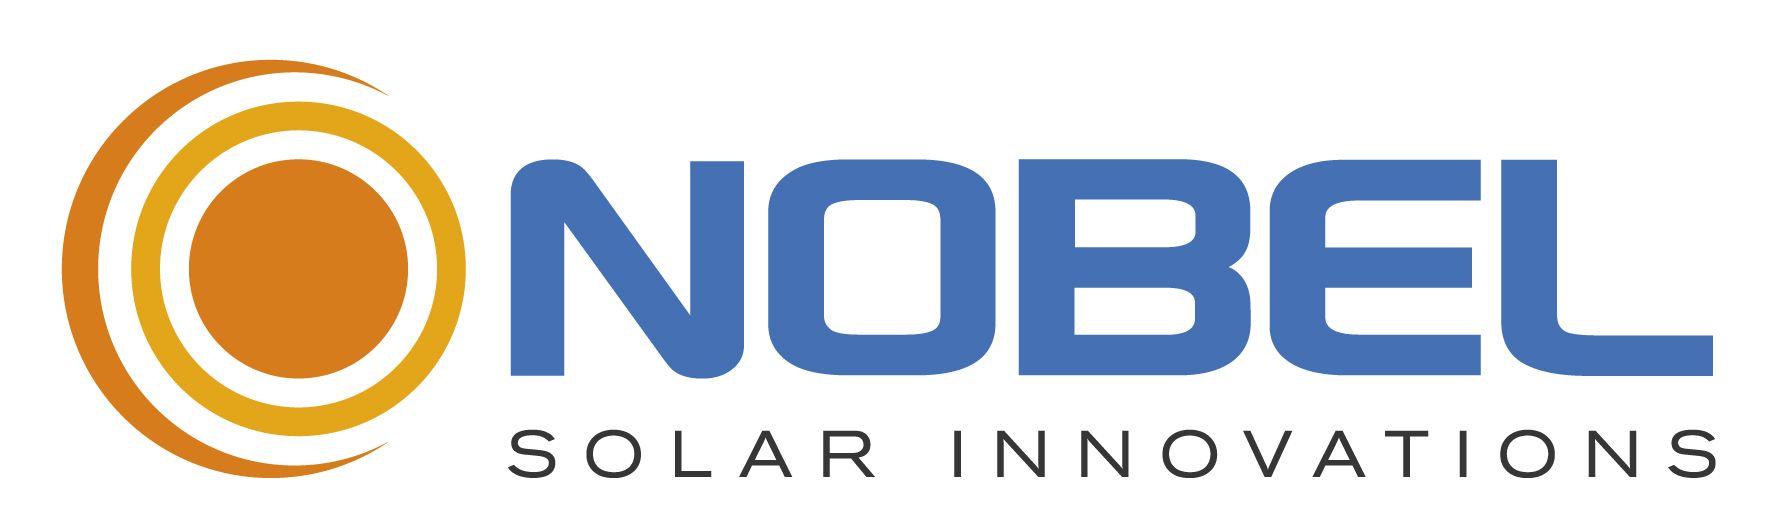 Nobel Logo - NOBEL XILINAKIS D. & Co